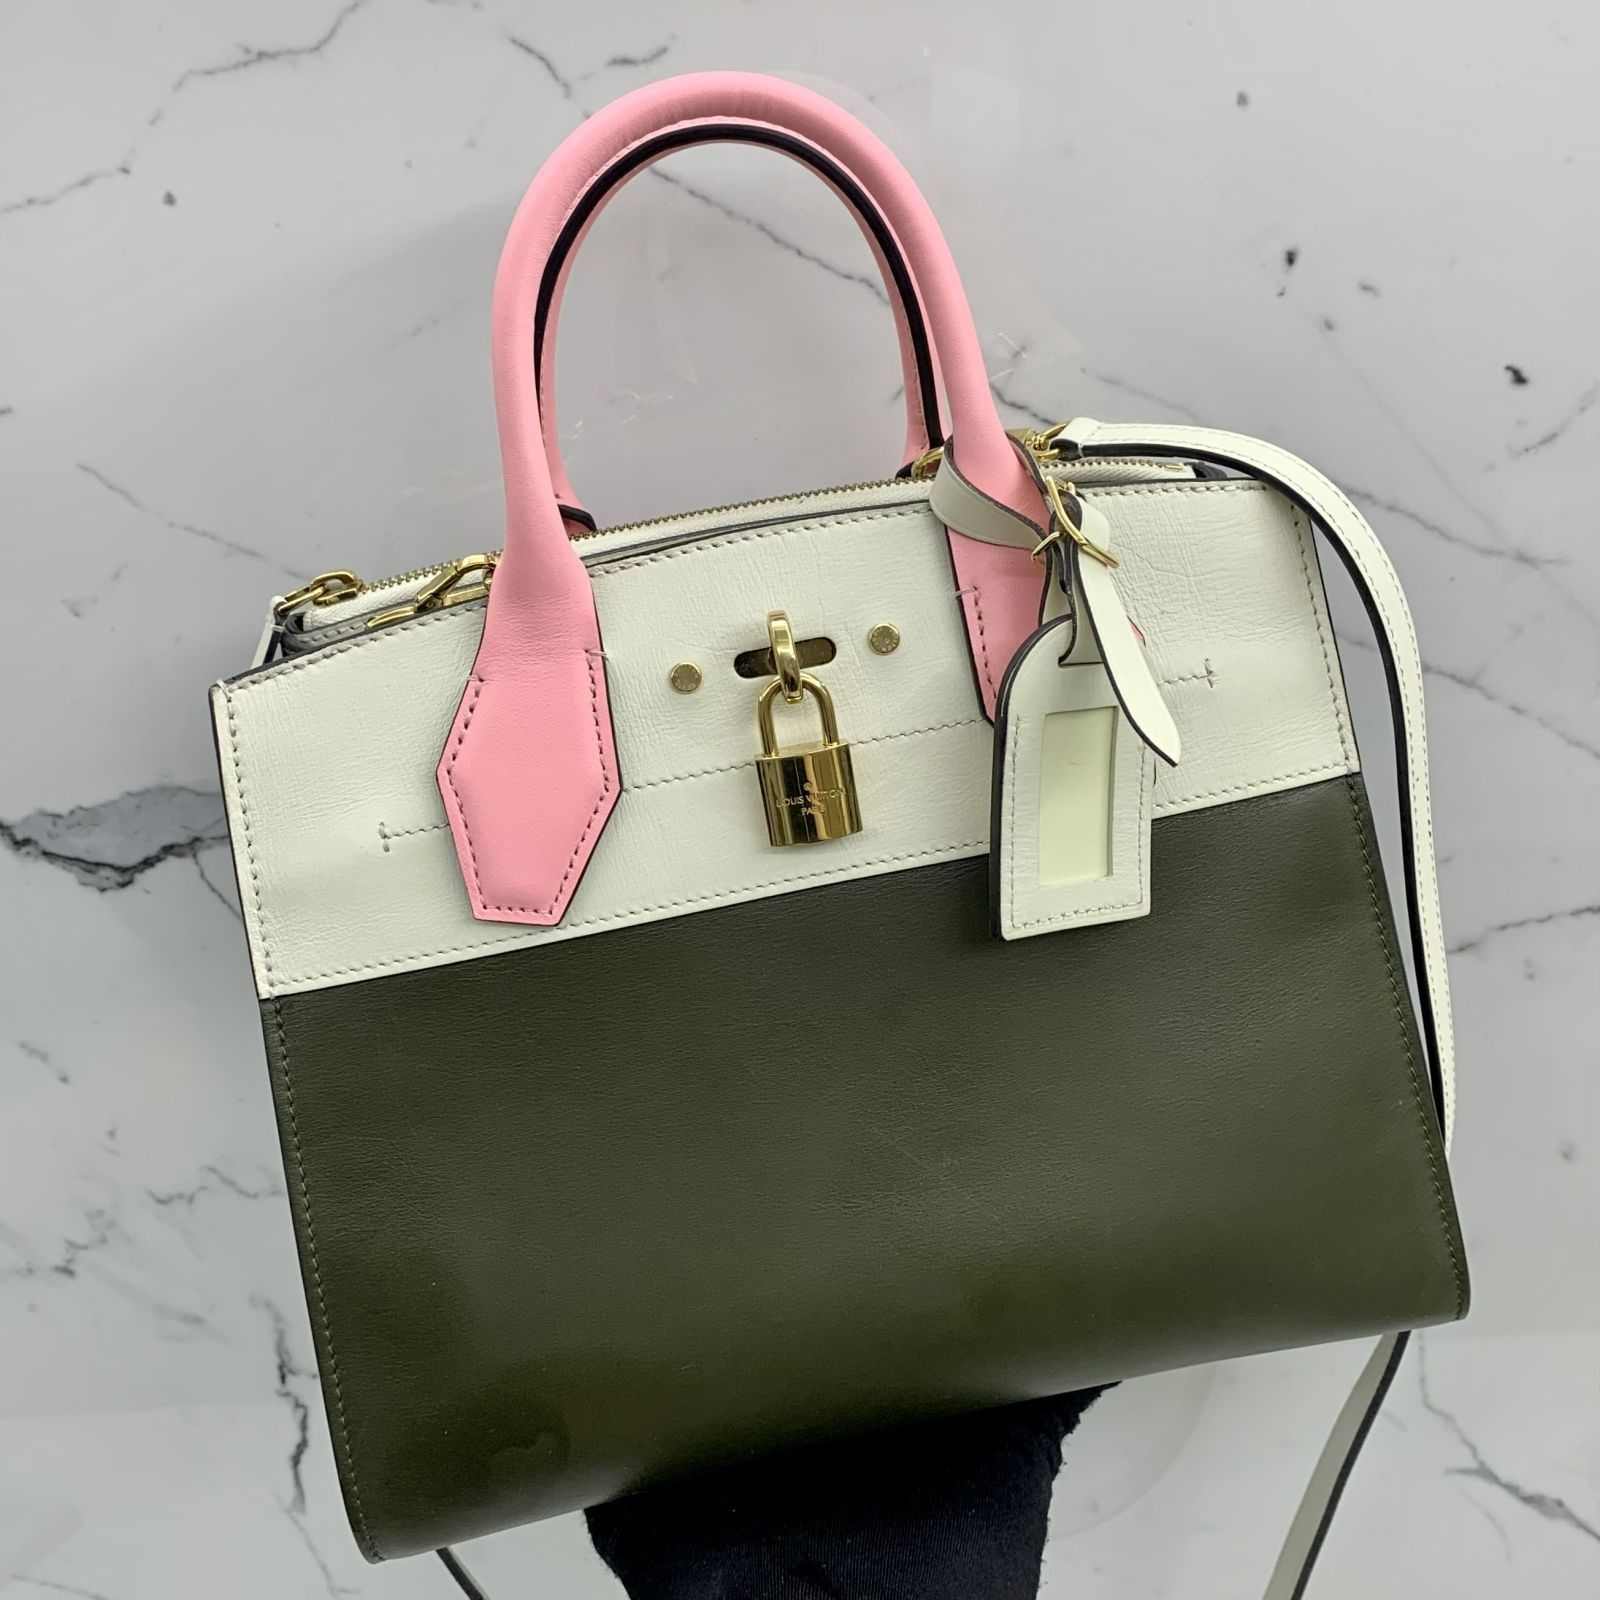 City steamer leather handbag Louis Vuitton Multicolour in Leather - 22971545